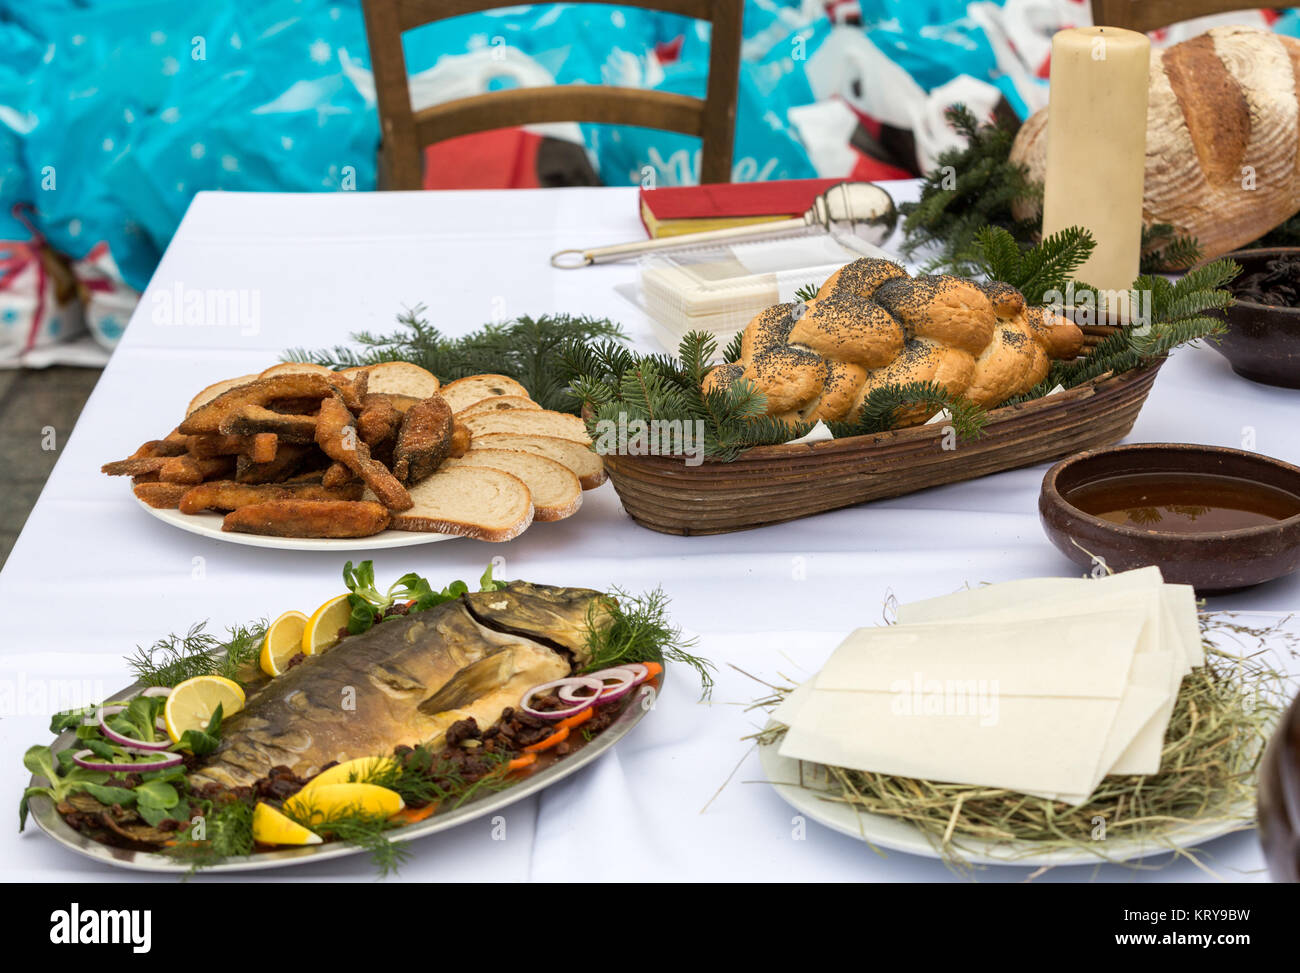 Christmas food on the table decorating with Christmas tree Stock Photo